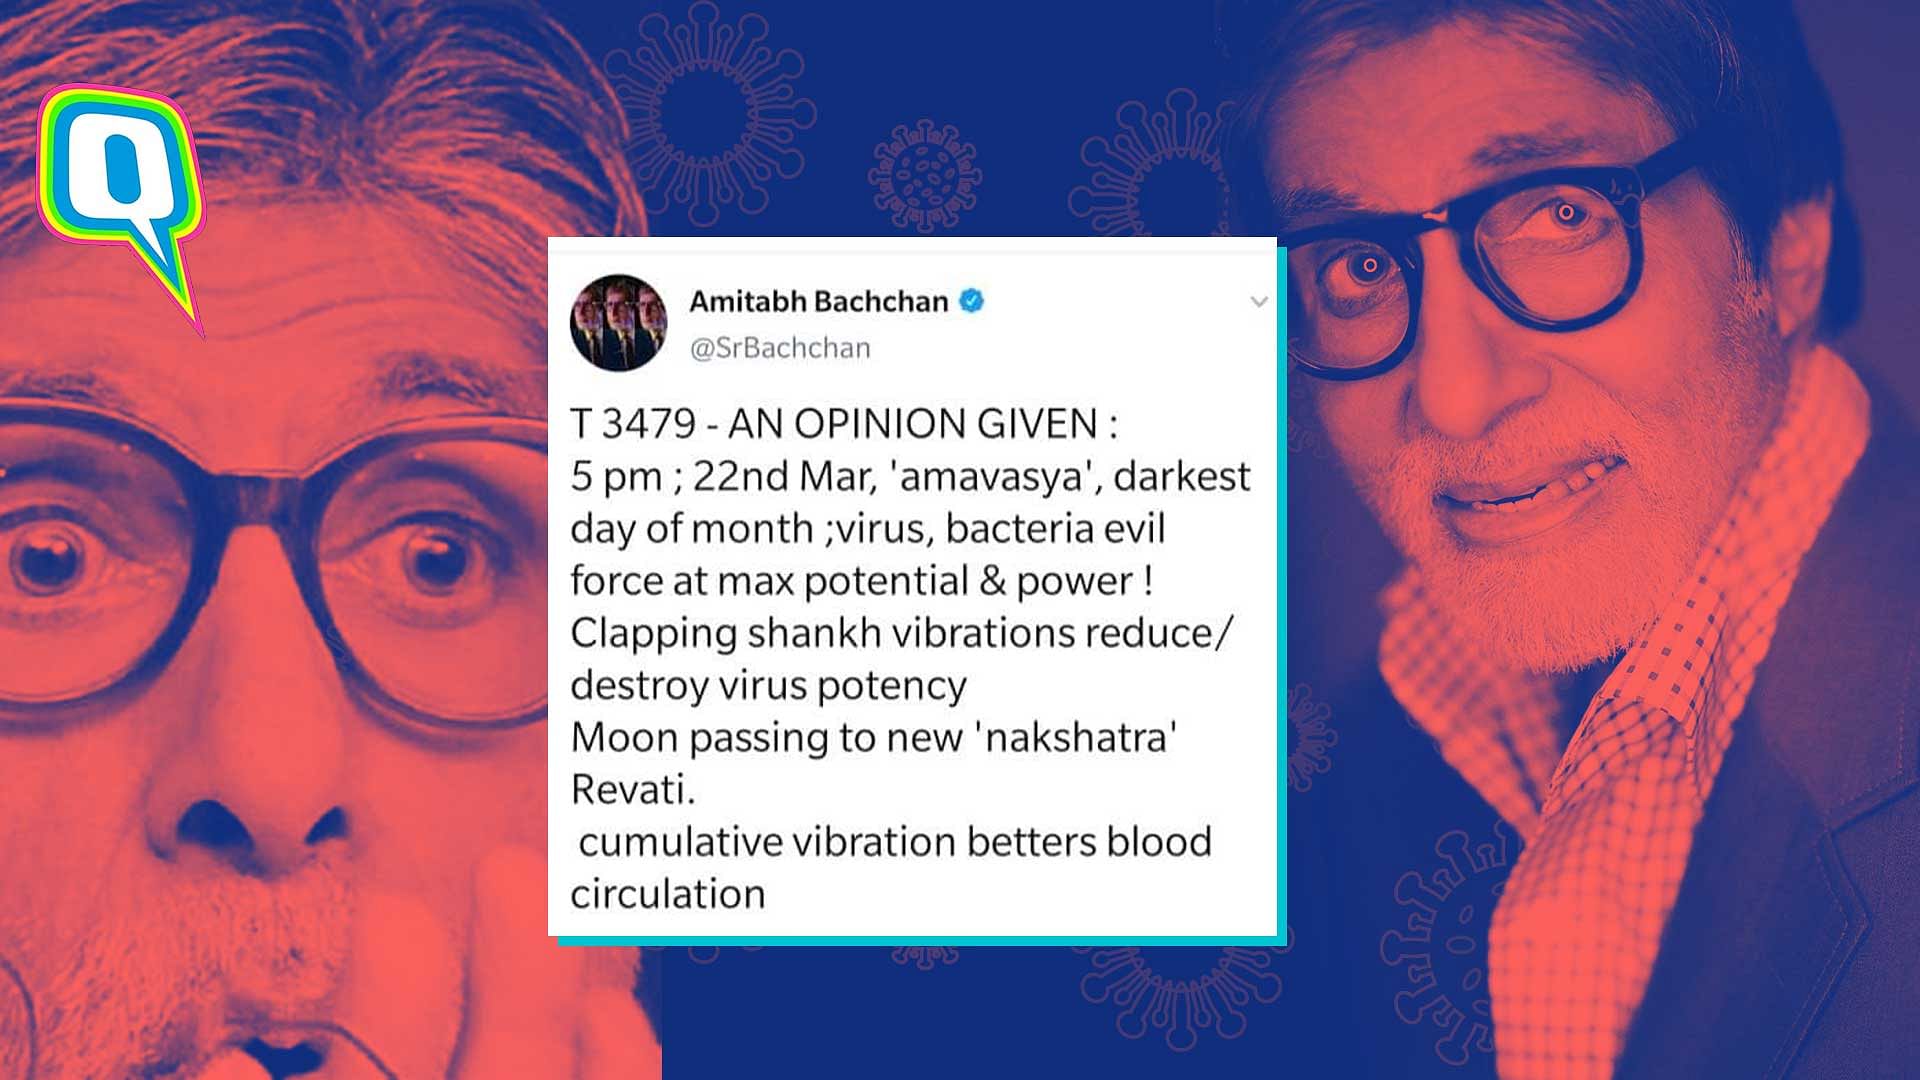 Amitabh Bachchan’s coronavirus tweet was taken down in light of the backlash he received on Twitter.